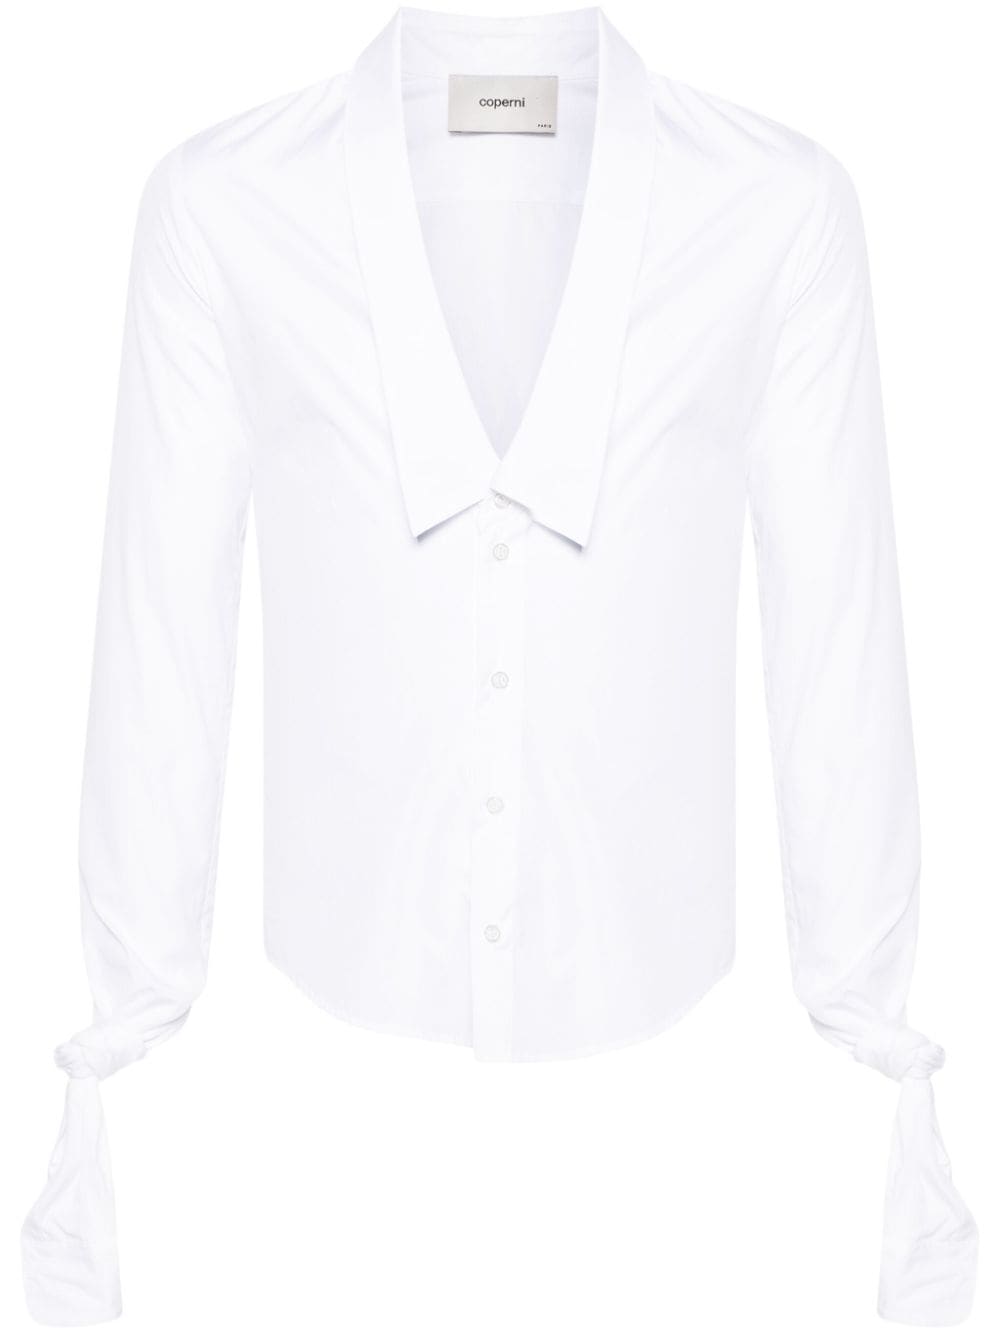 Coperni extra-long sleeves cotton shirt - White von Coperni